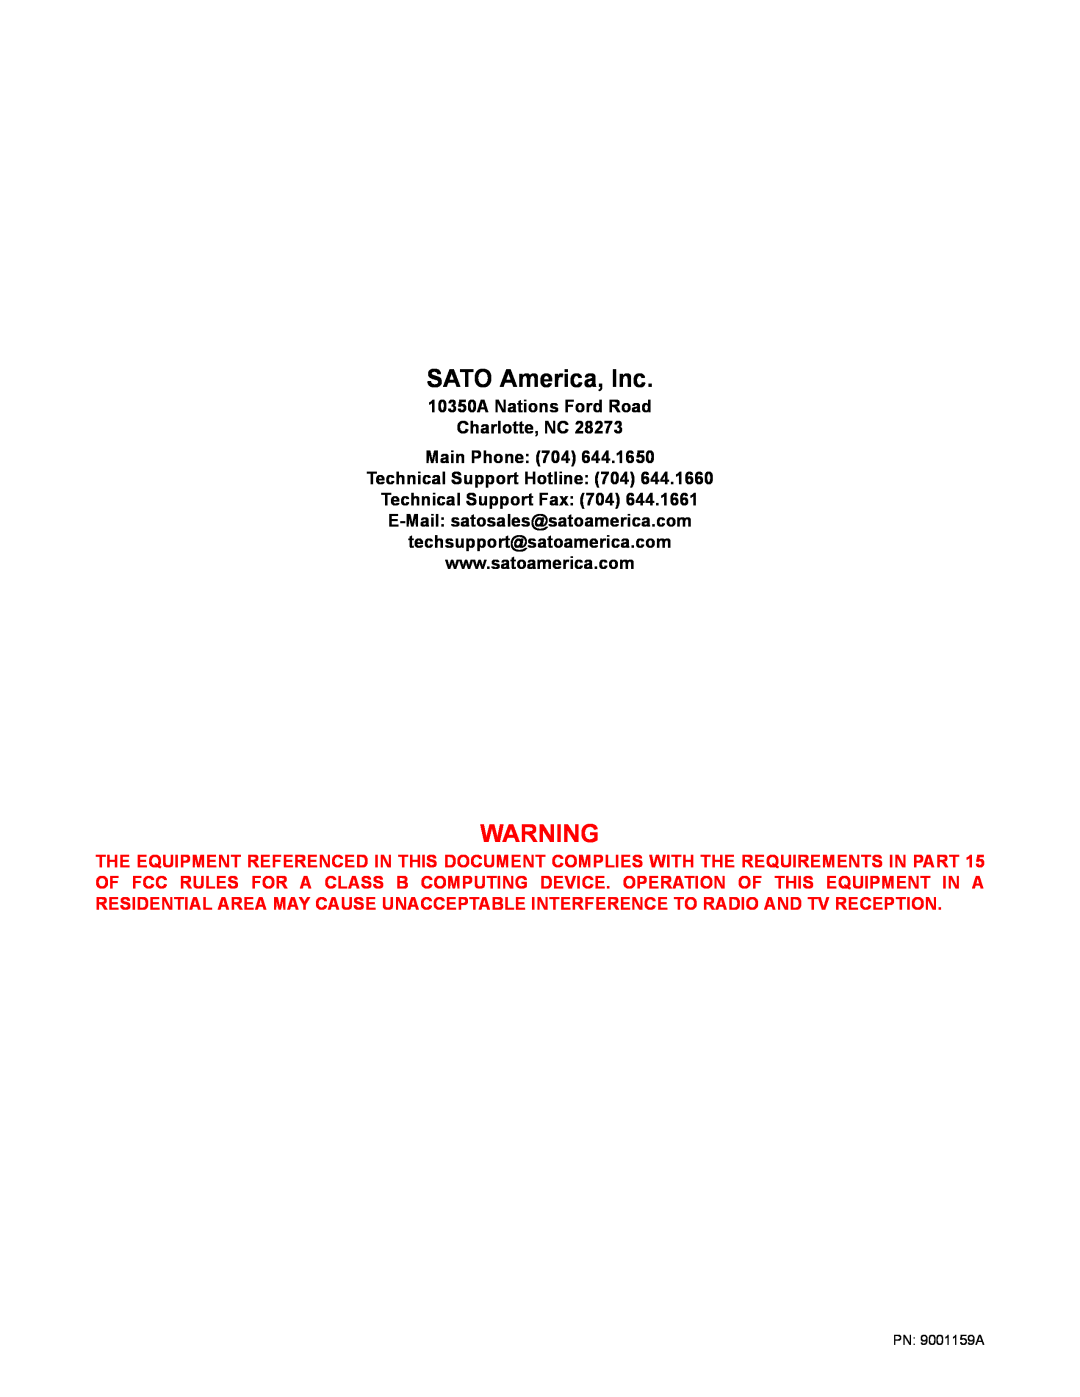 SATO CL408-412e manual SATO America, Inc, 10350A Nations Ford Road Charlotte, NC Main Phone 704 